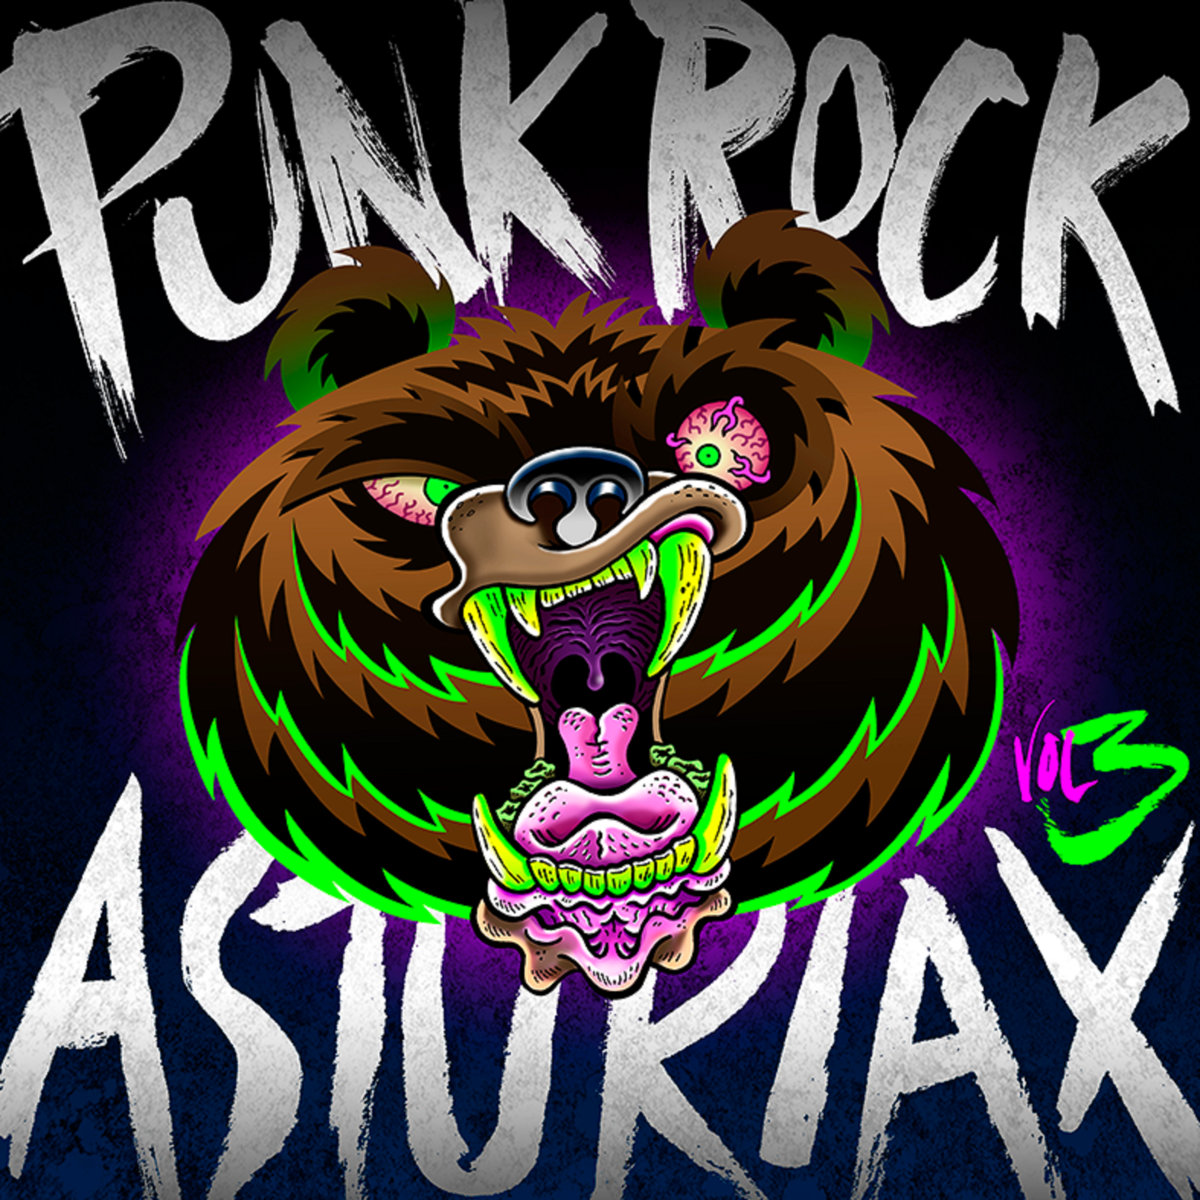 Recopilatorio Astruiax Punk Rock